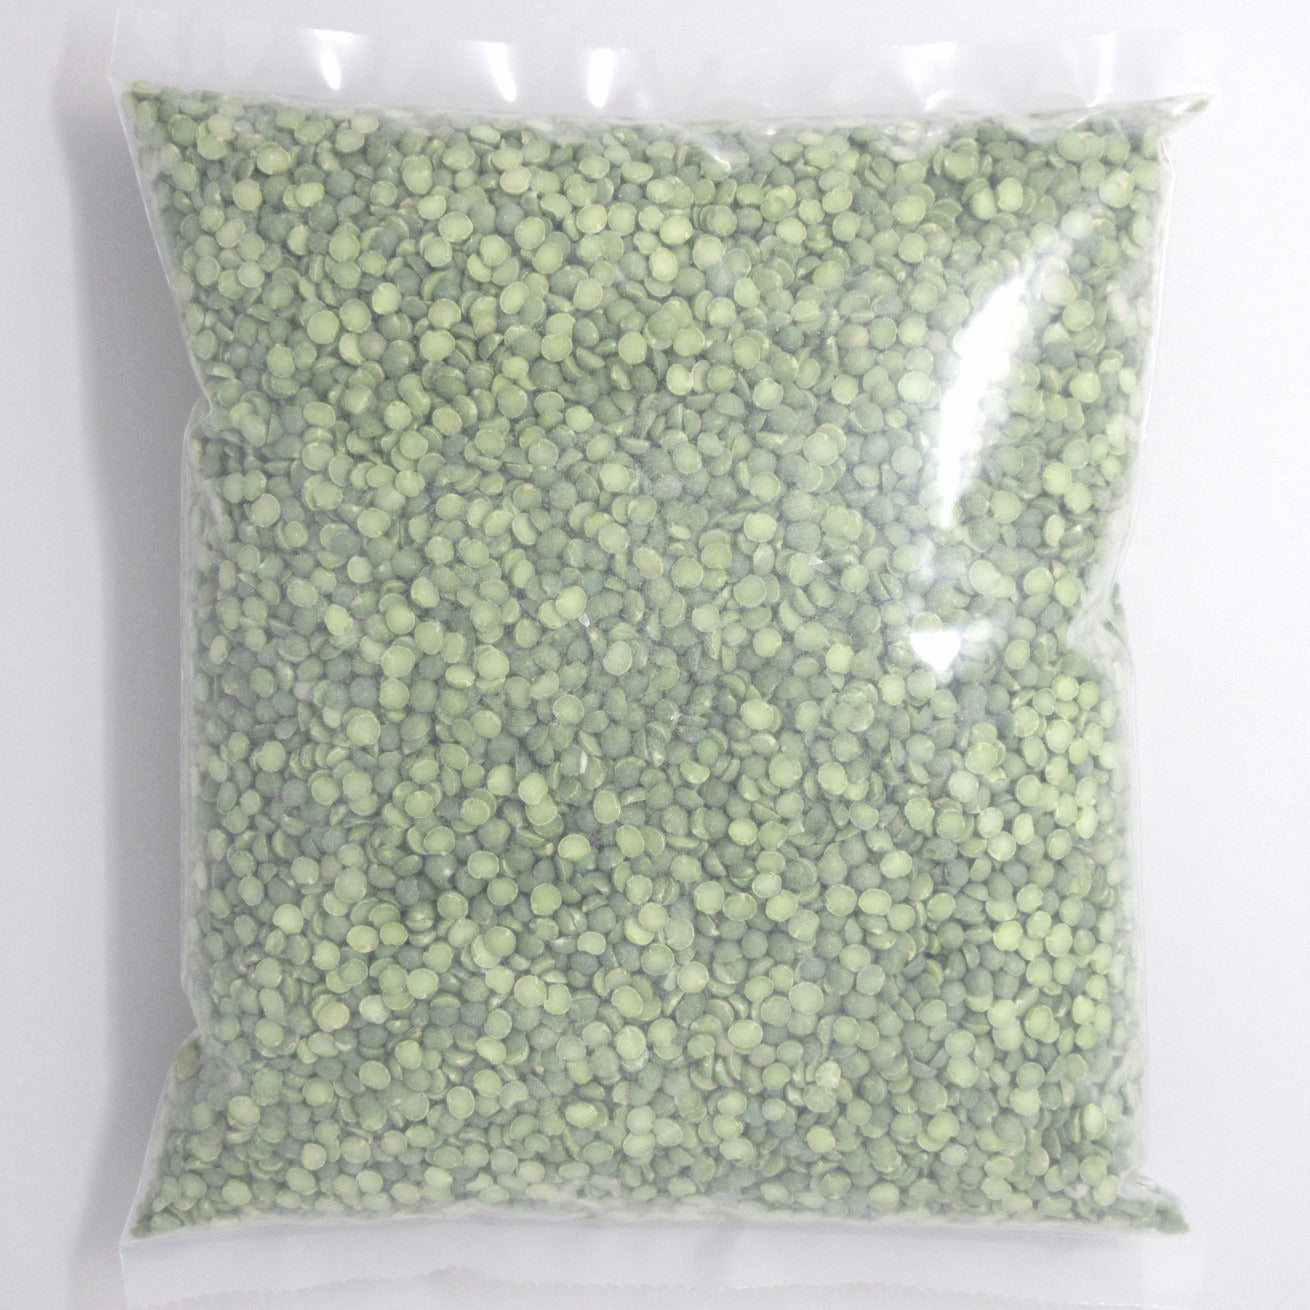 Flour Barrel product image - Split Green Peas